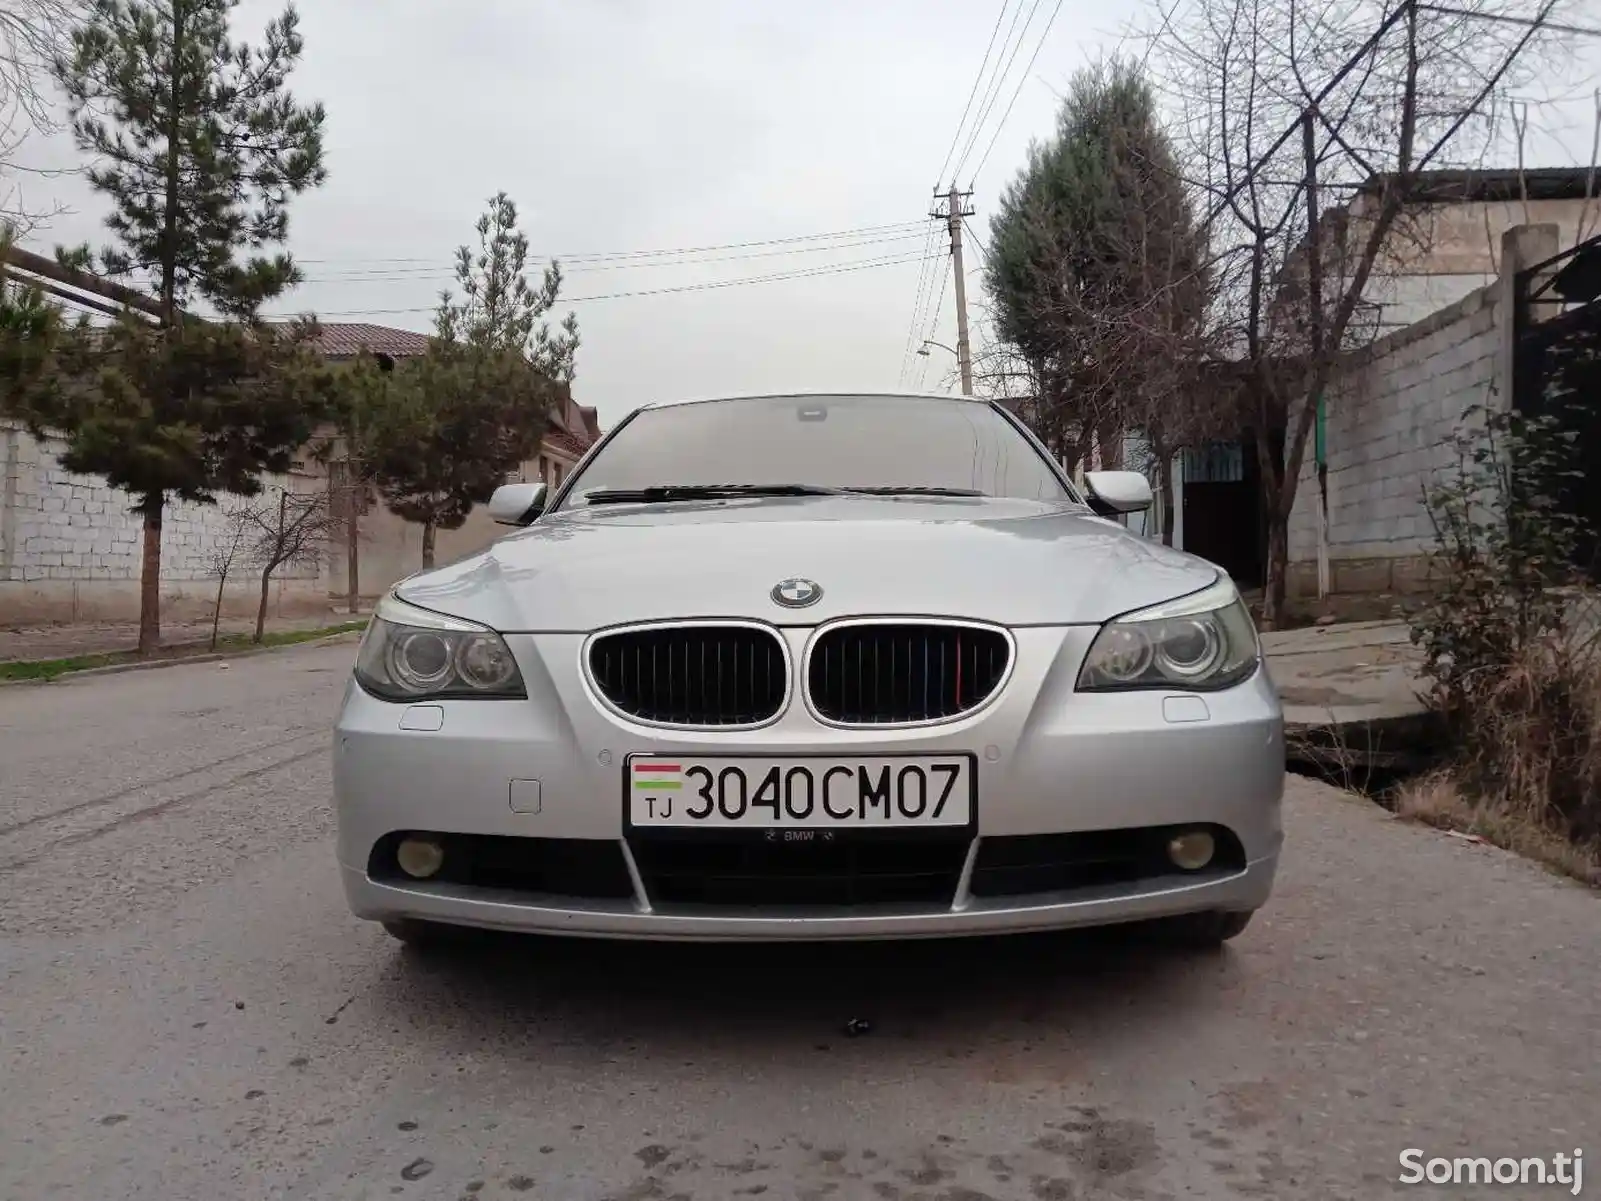 BMW 5 series, 2005-2